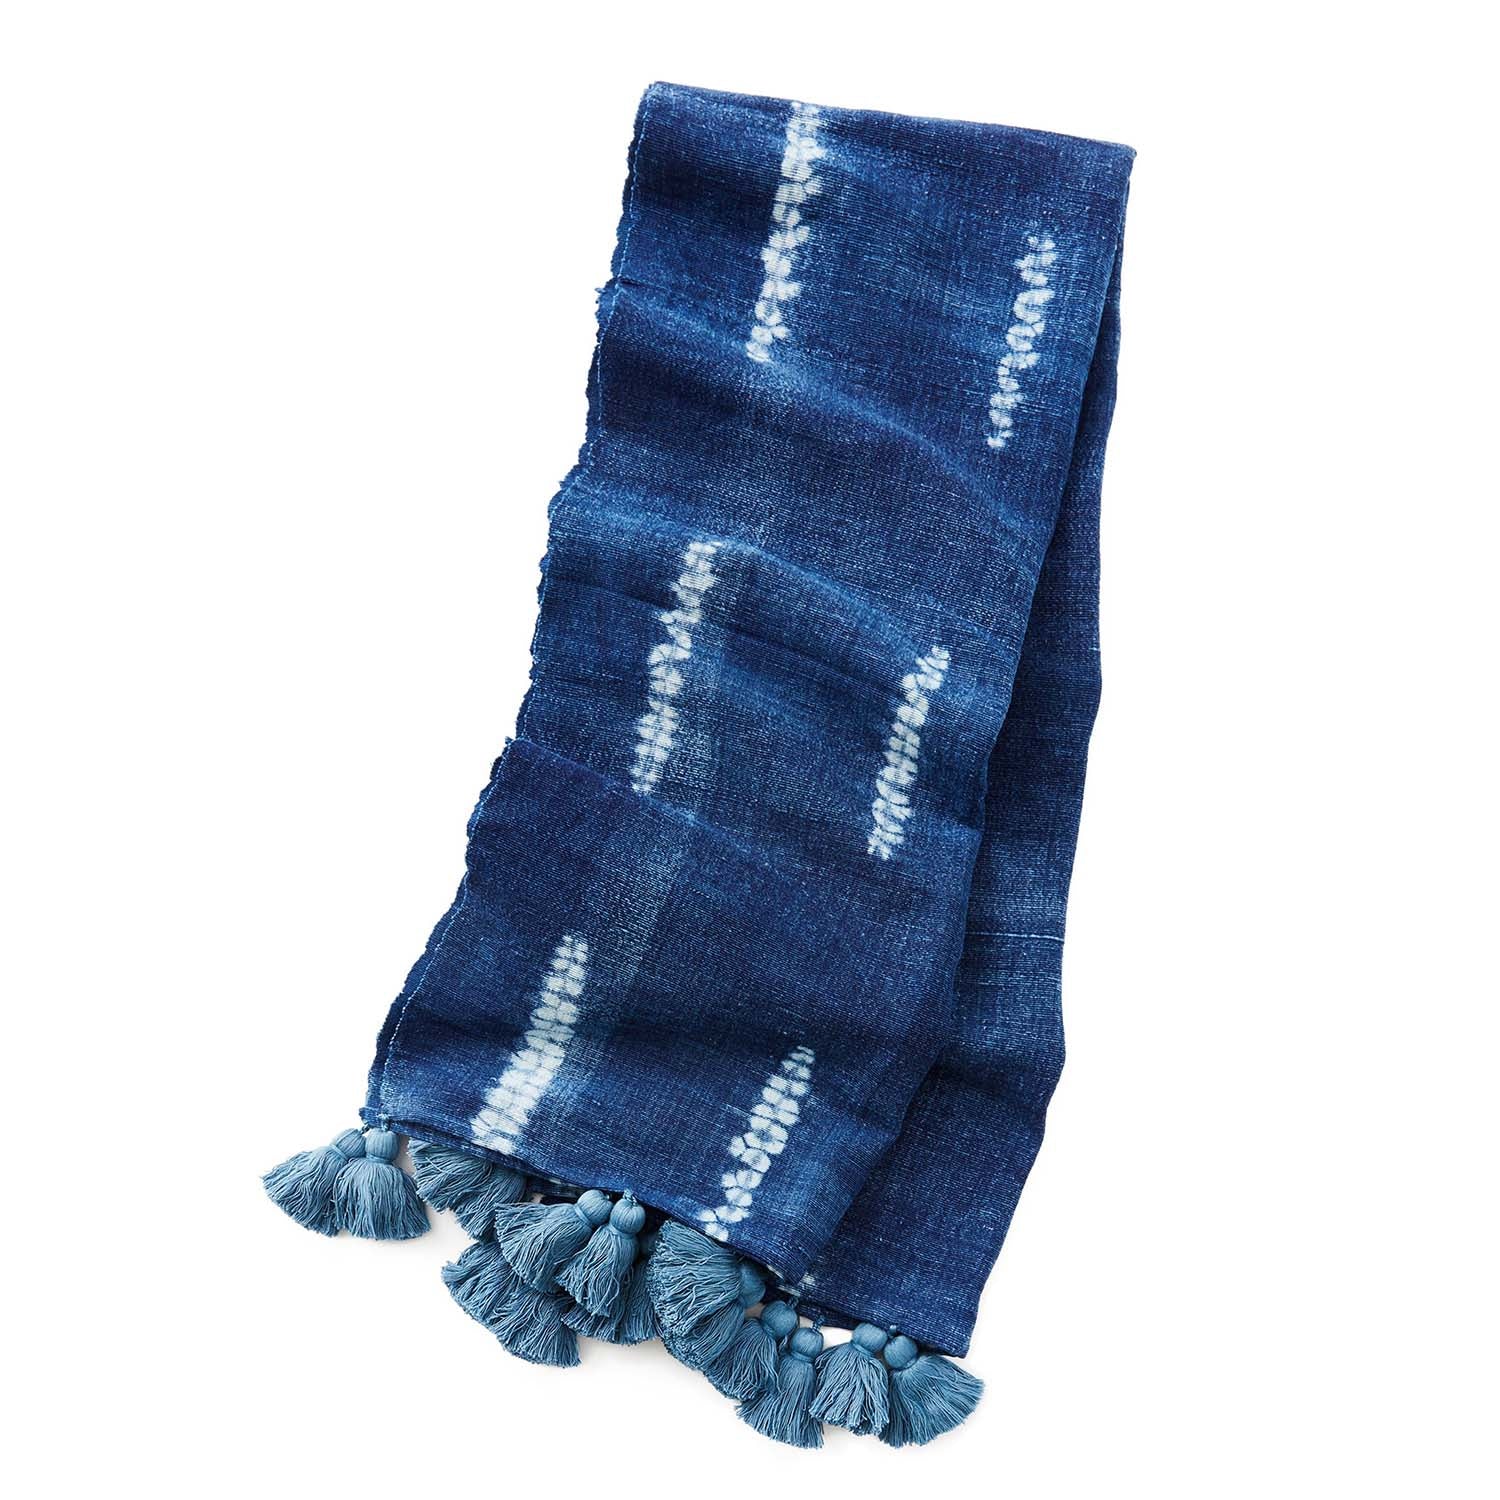 Hand-dyed indigo throw blanket